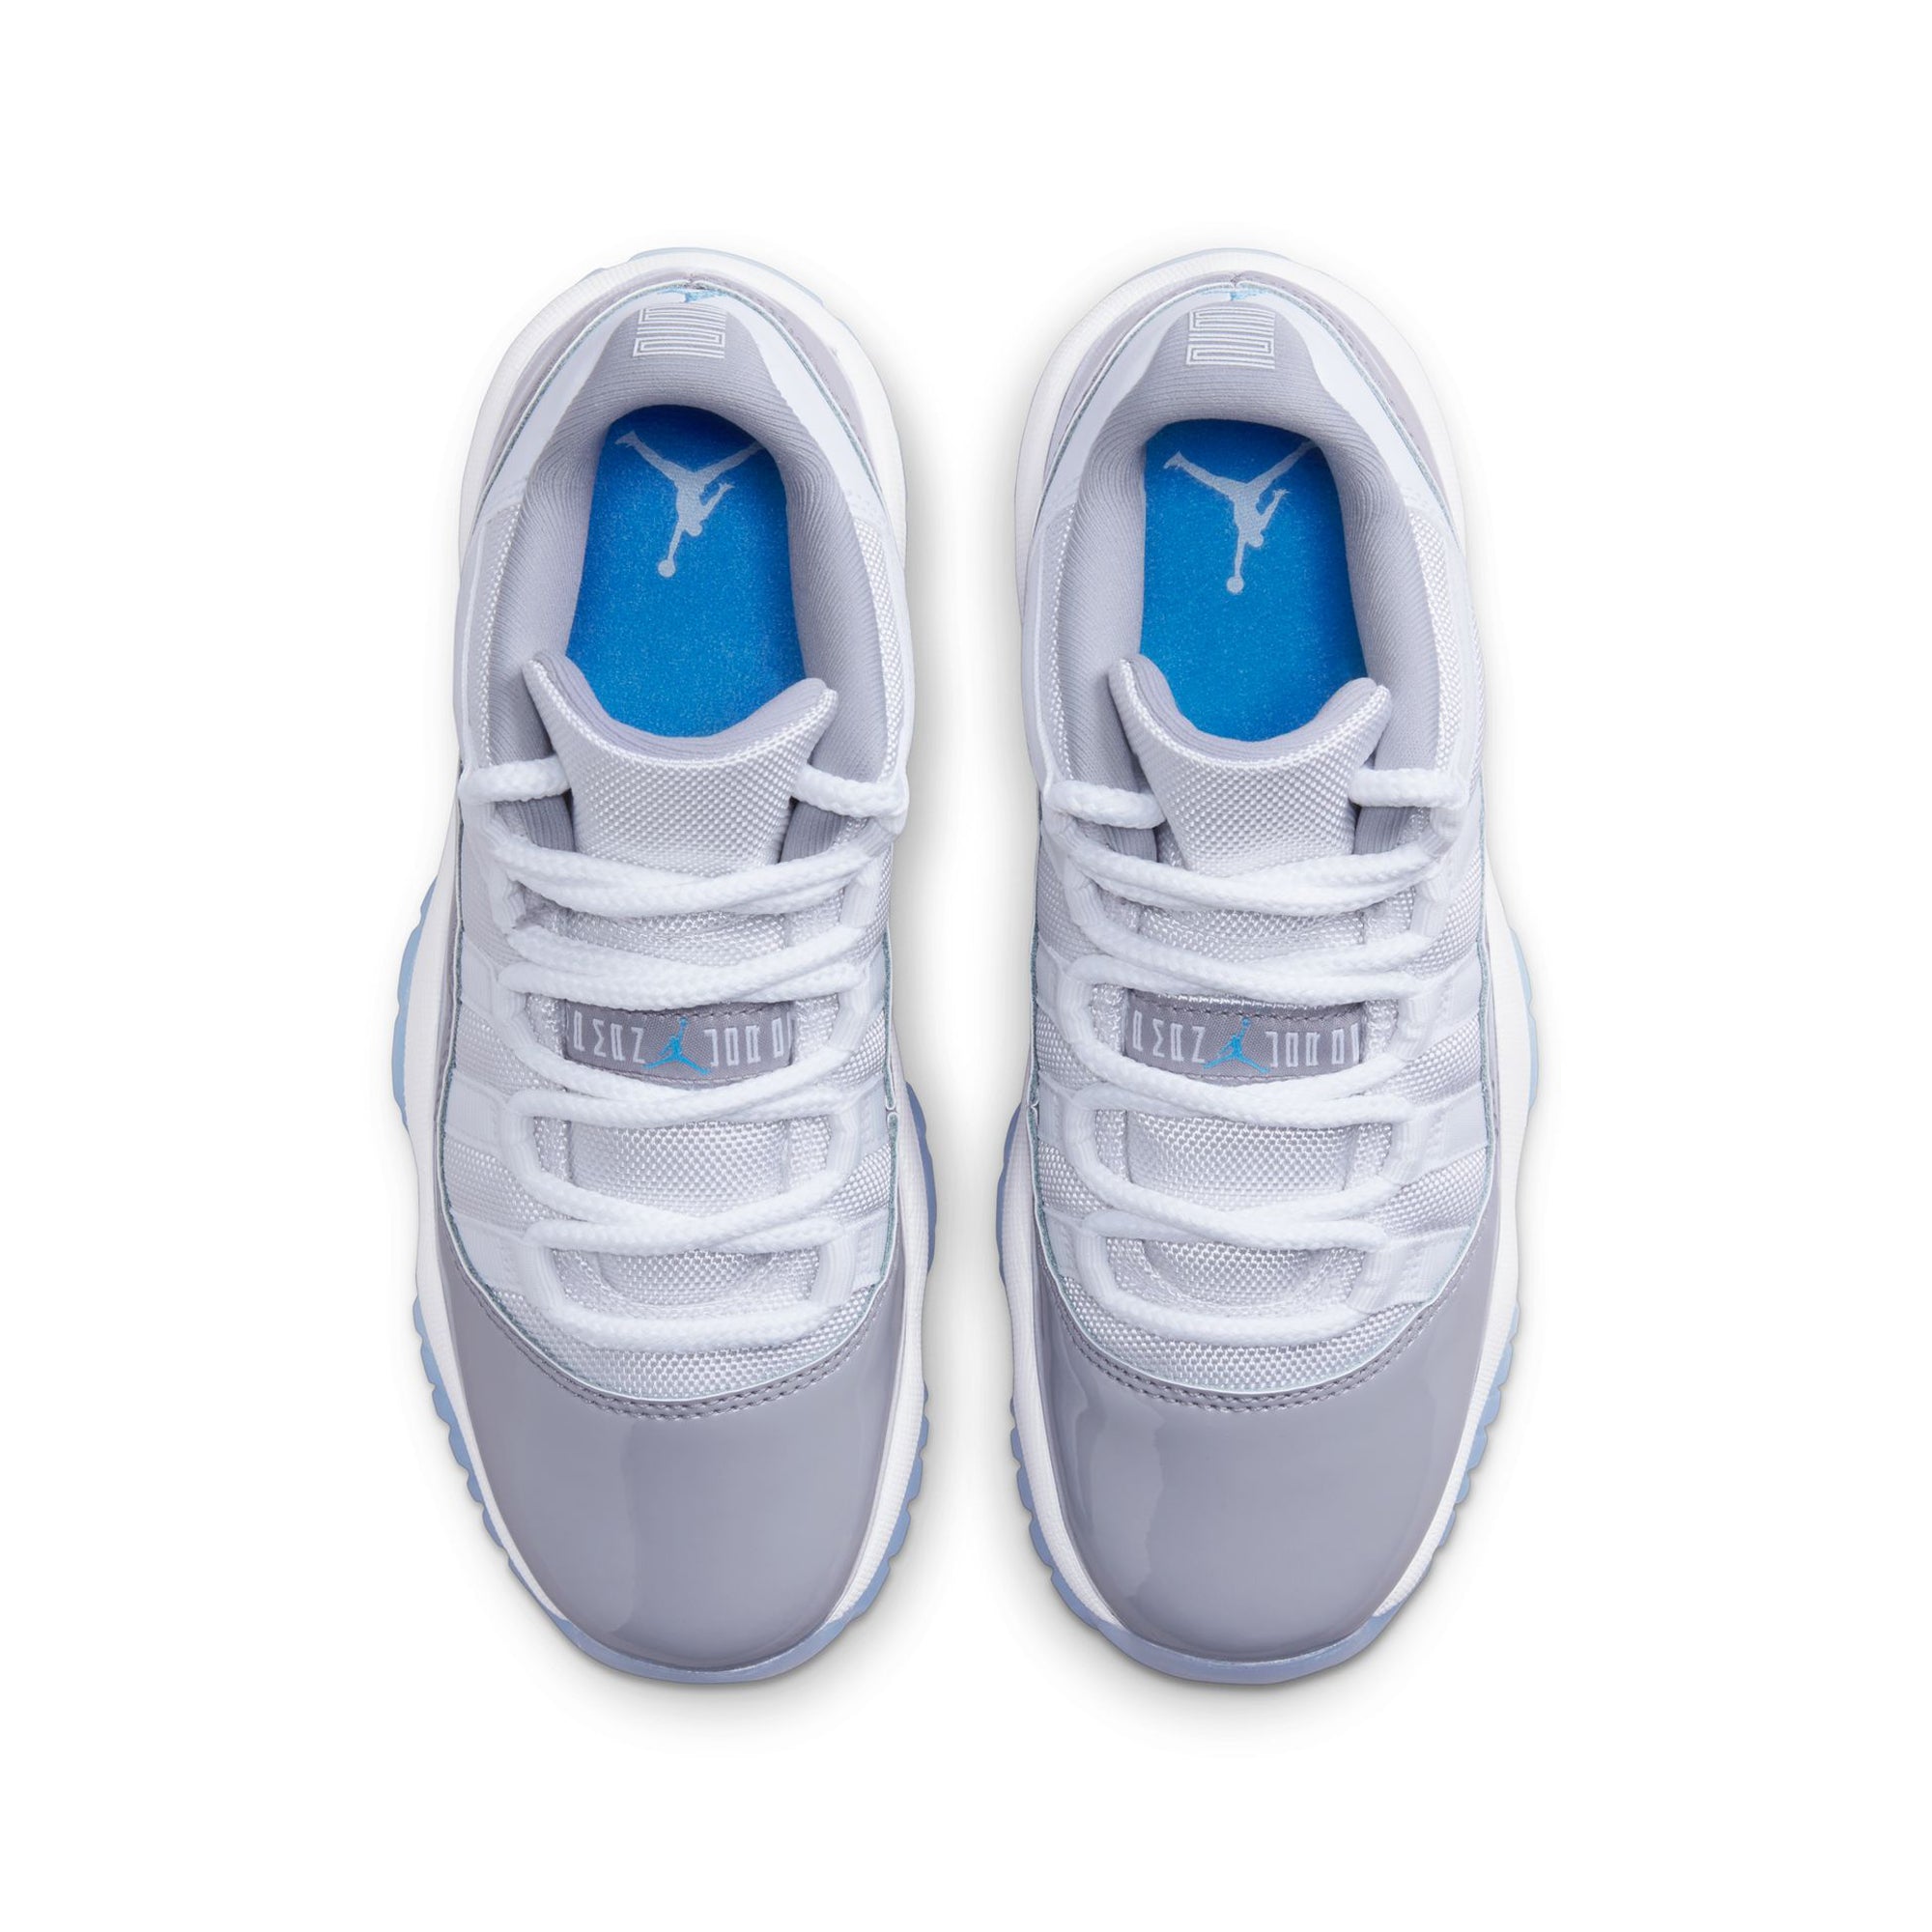 NEW FASHION] Louis Vuitton Premium Air Jordan 11 Sneakers Sport Shoes  Fashion For Men Women